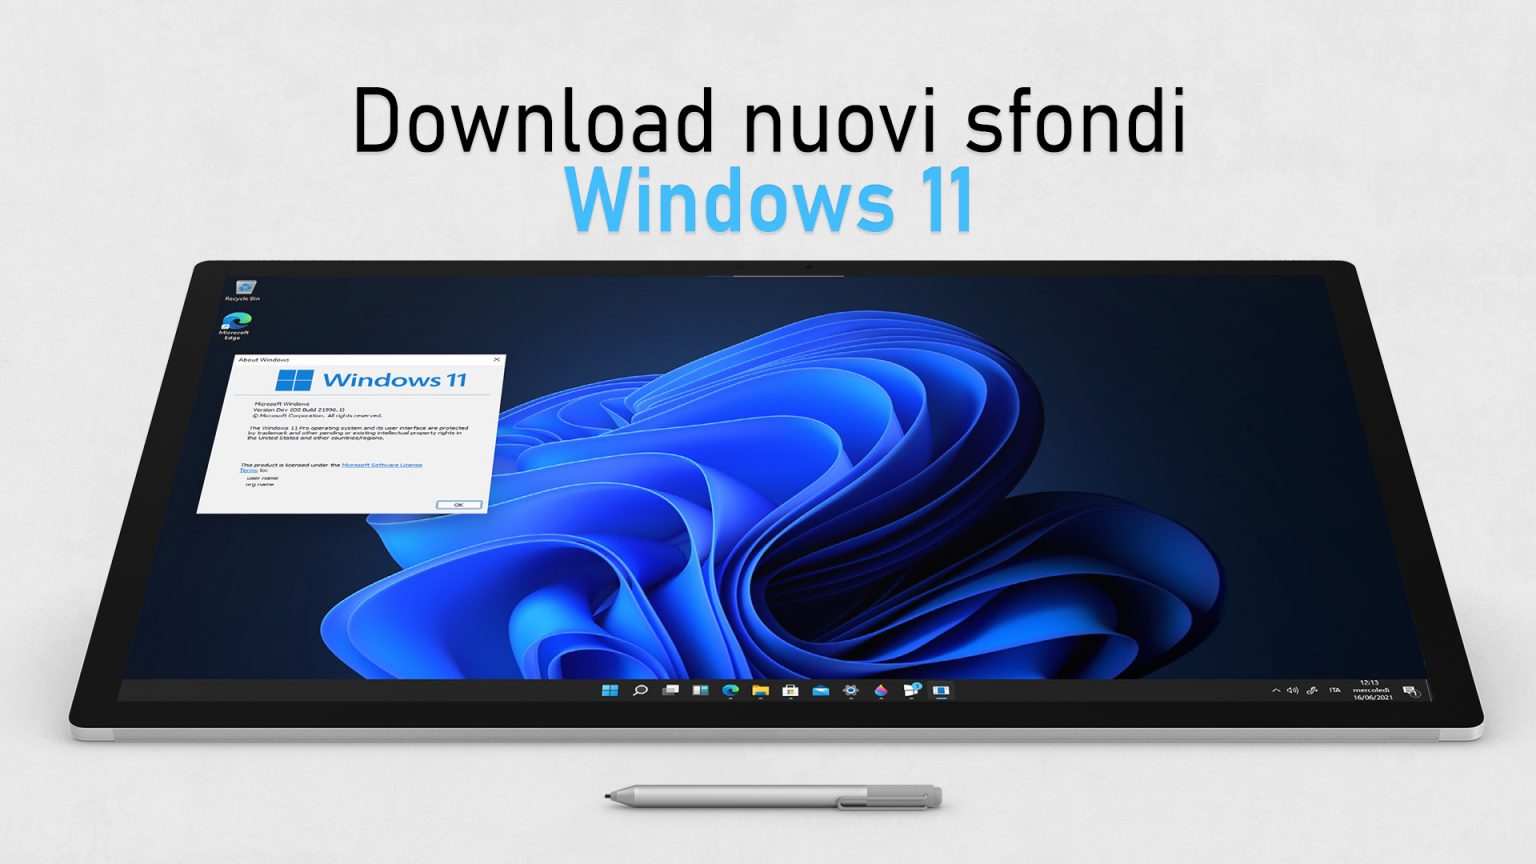 Windows 11 : Download nuovi sfondi ufficiali di Windows 11 / Windows 11 download 64bit full version to microsoft windows 11 windows 11 window 11 win 11 next windows os new windows windows 11.